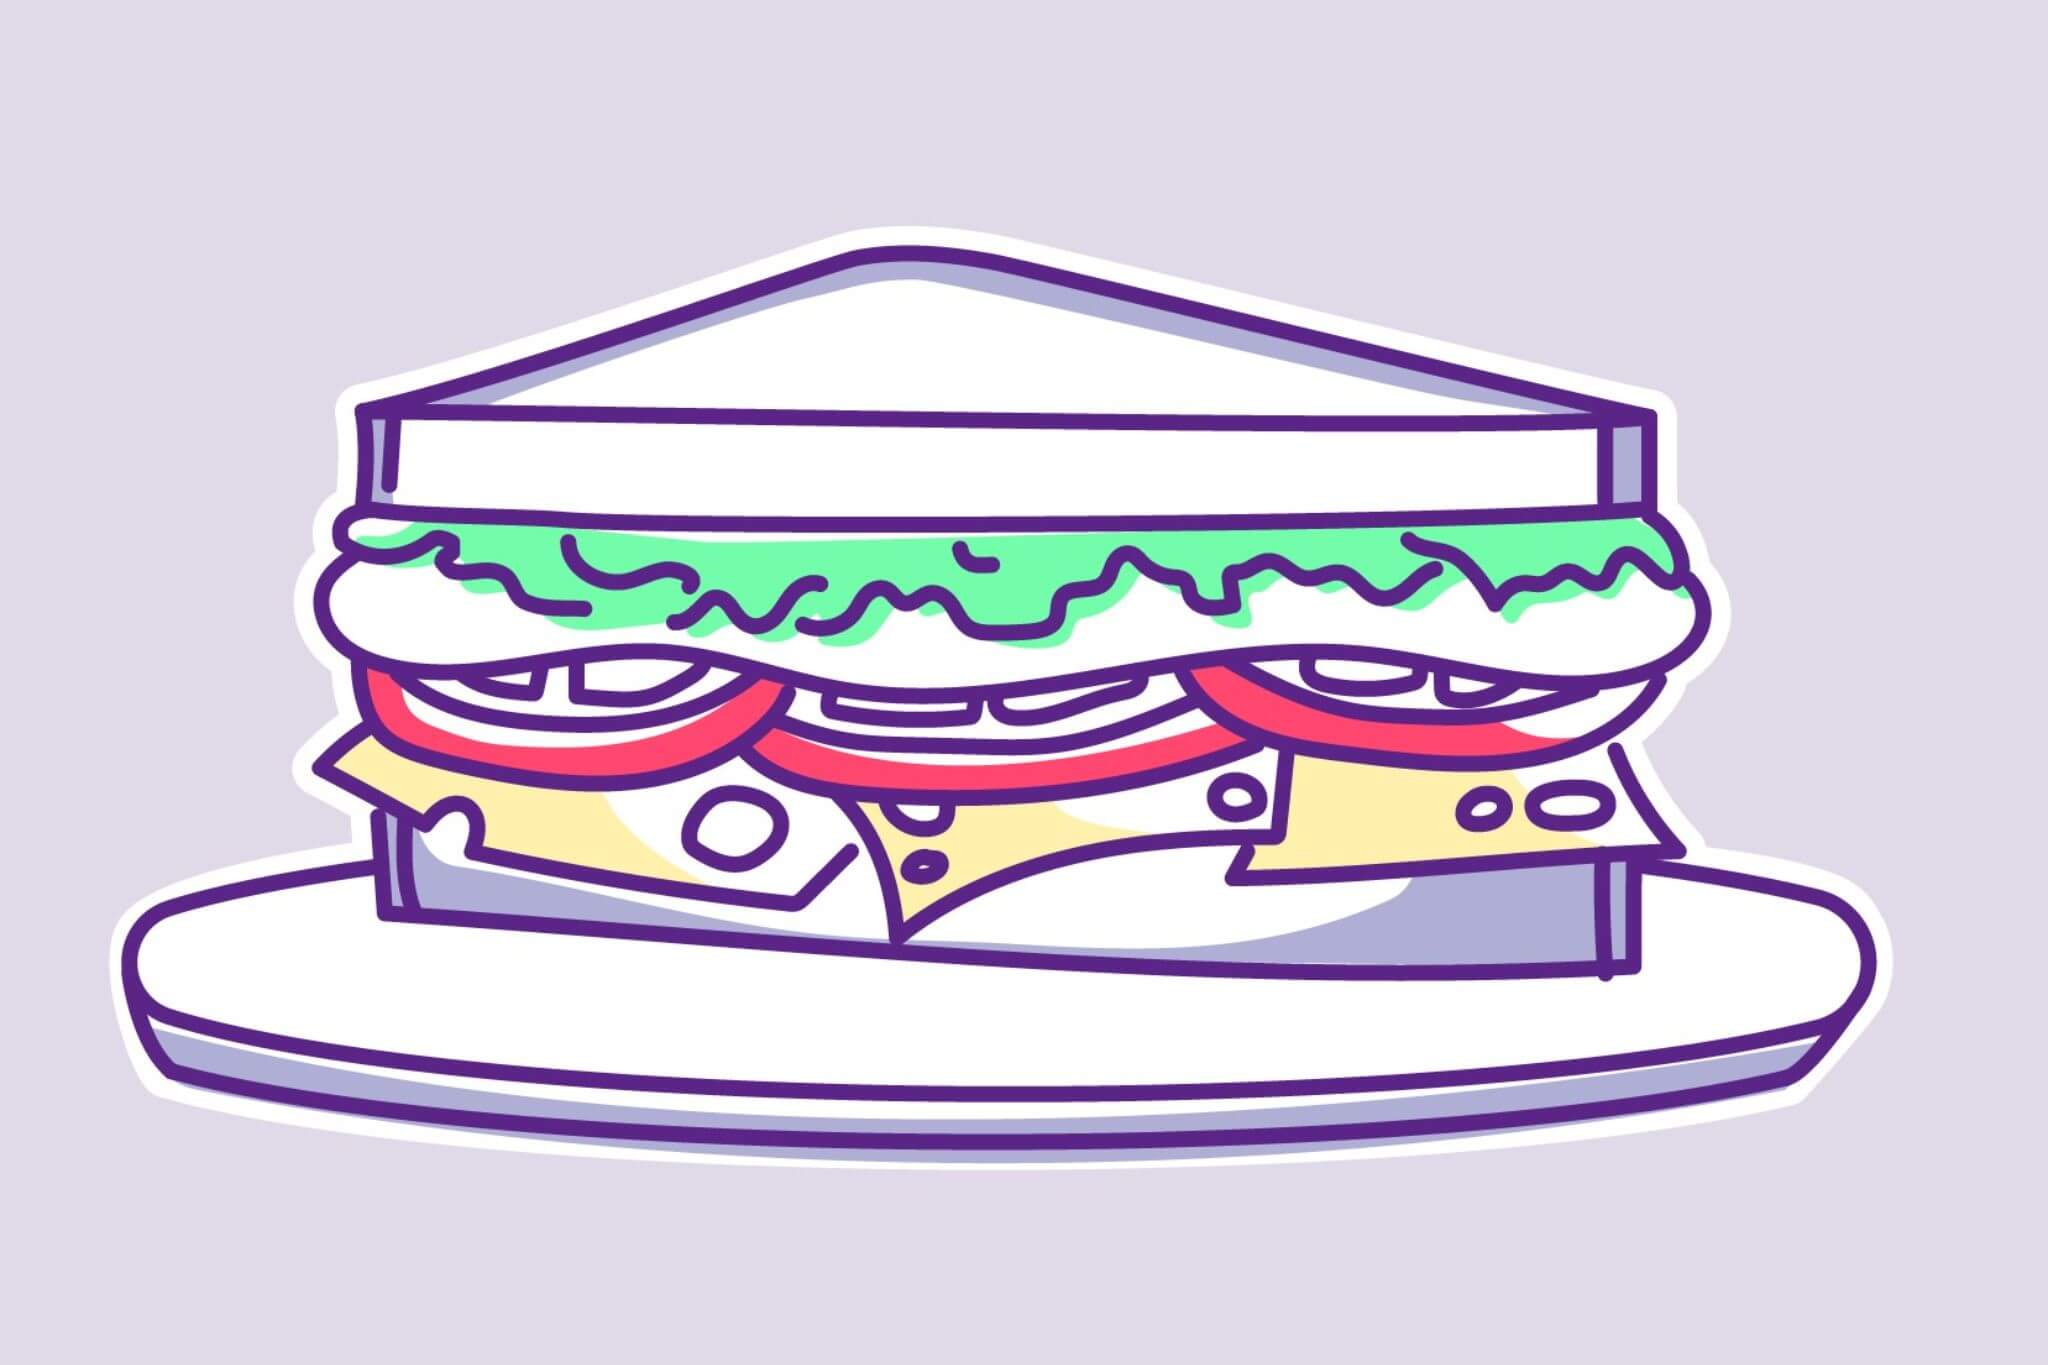 Piece meaning a sandwich